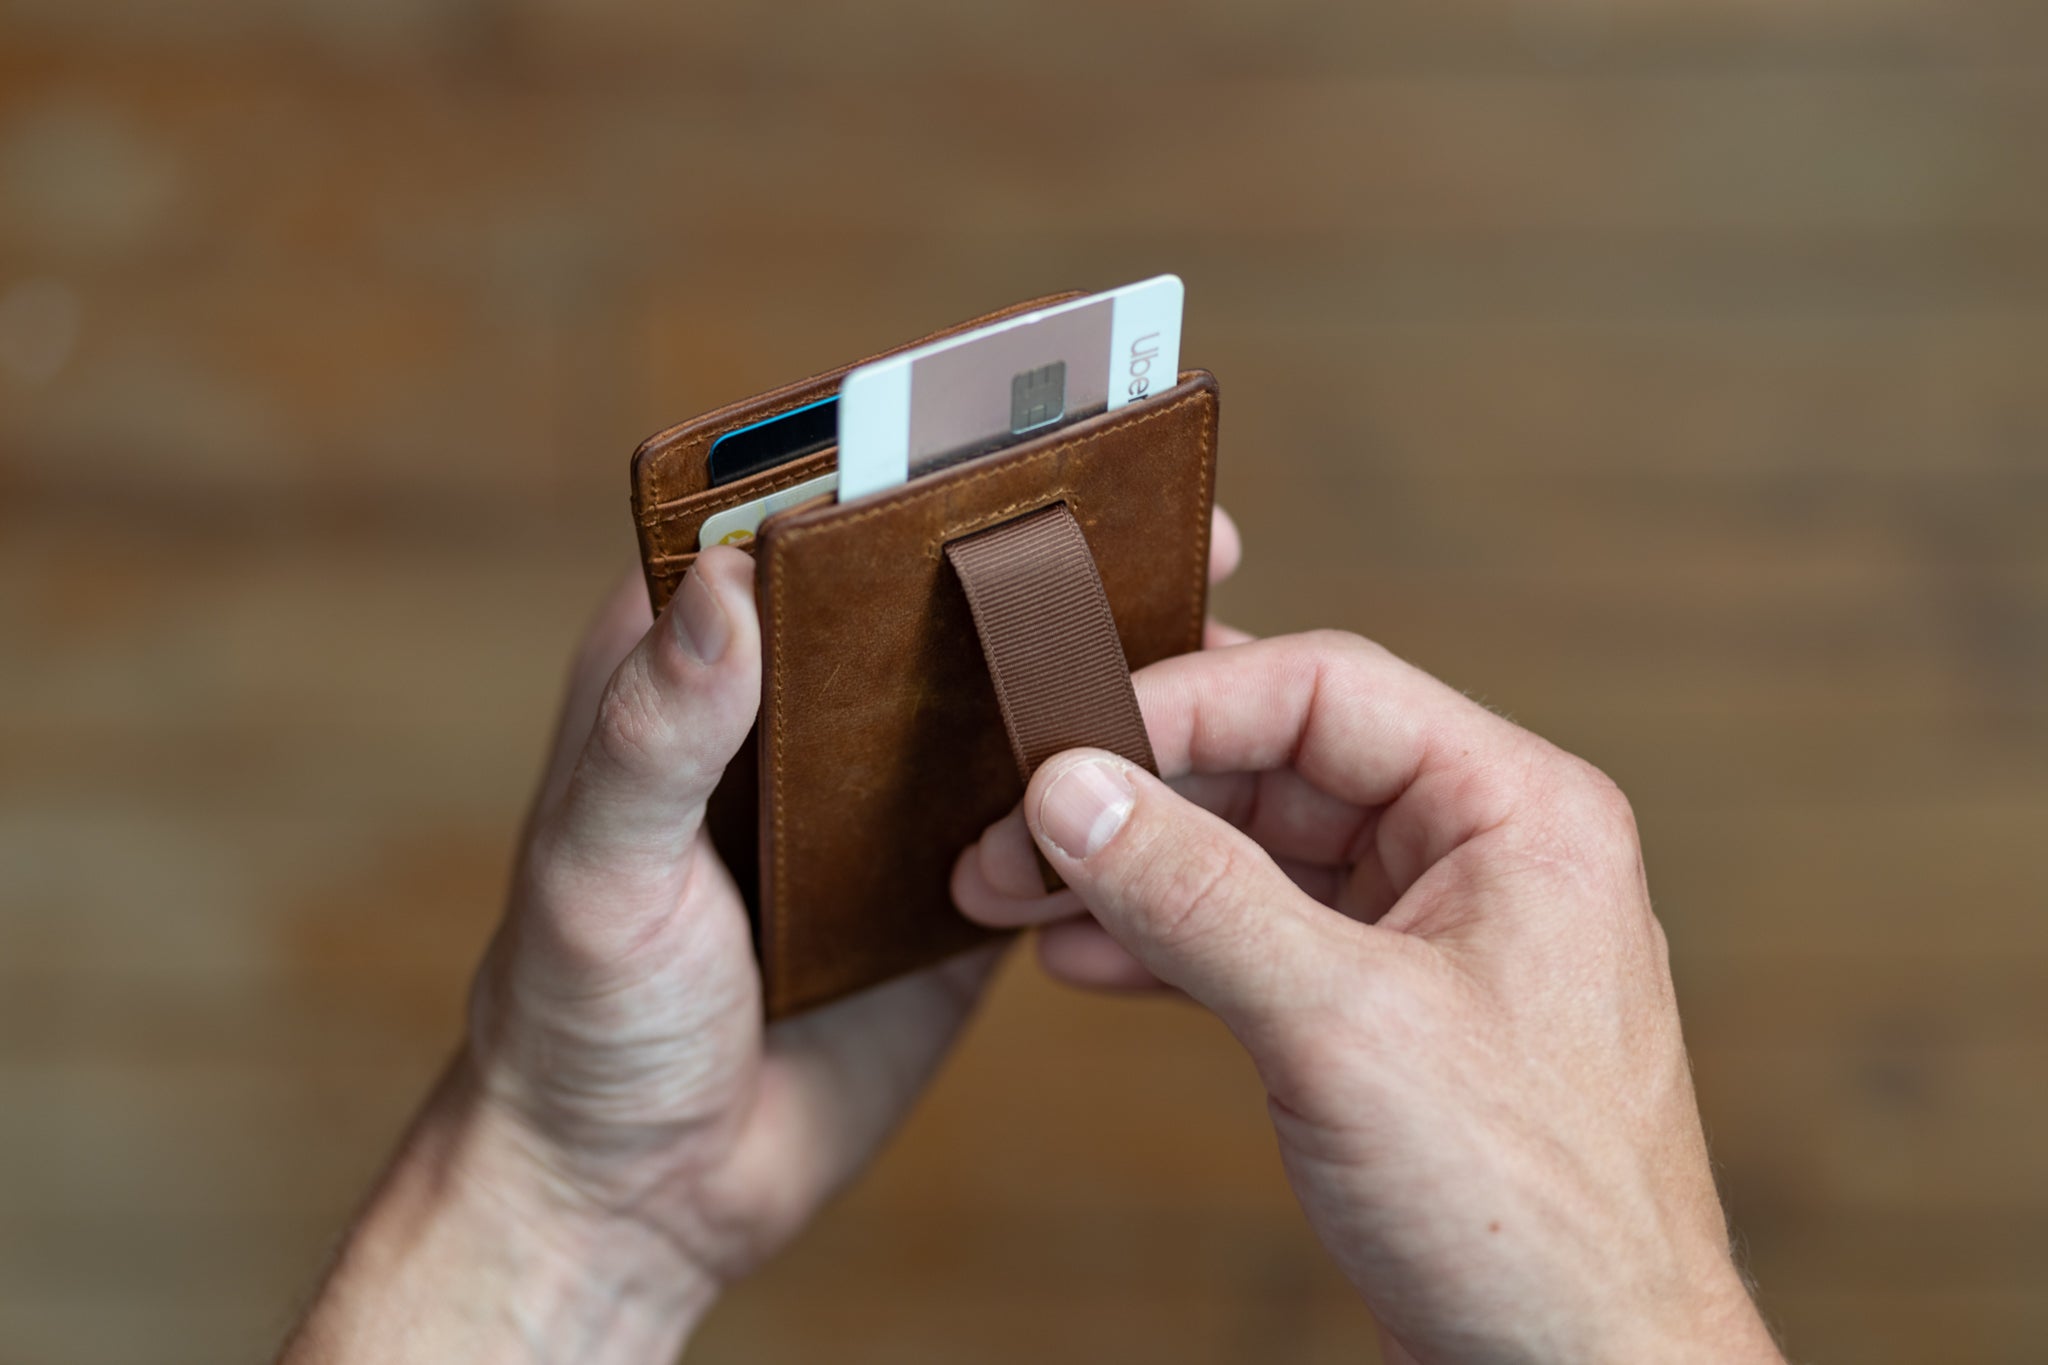 Monetial, AirTag Premium Leather Wallet, RFID Blocking